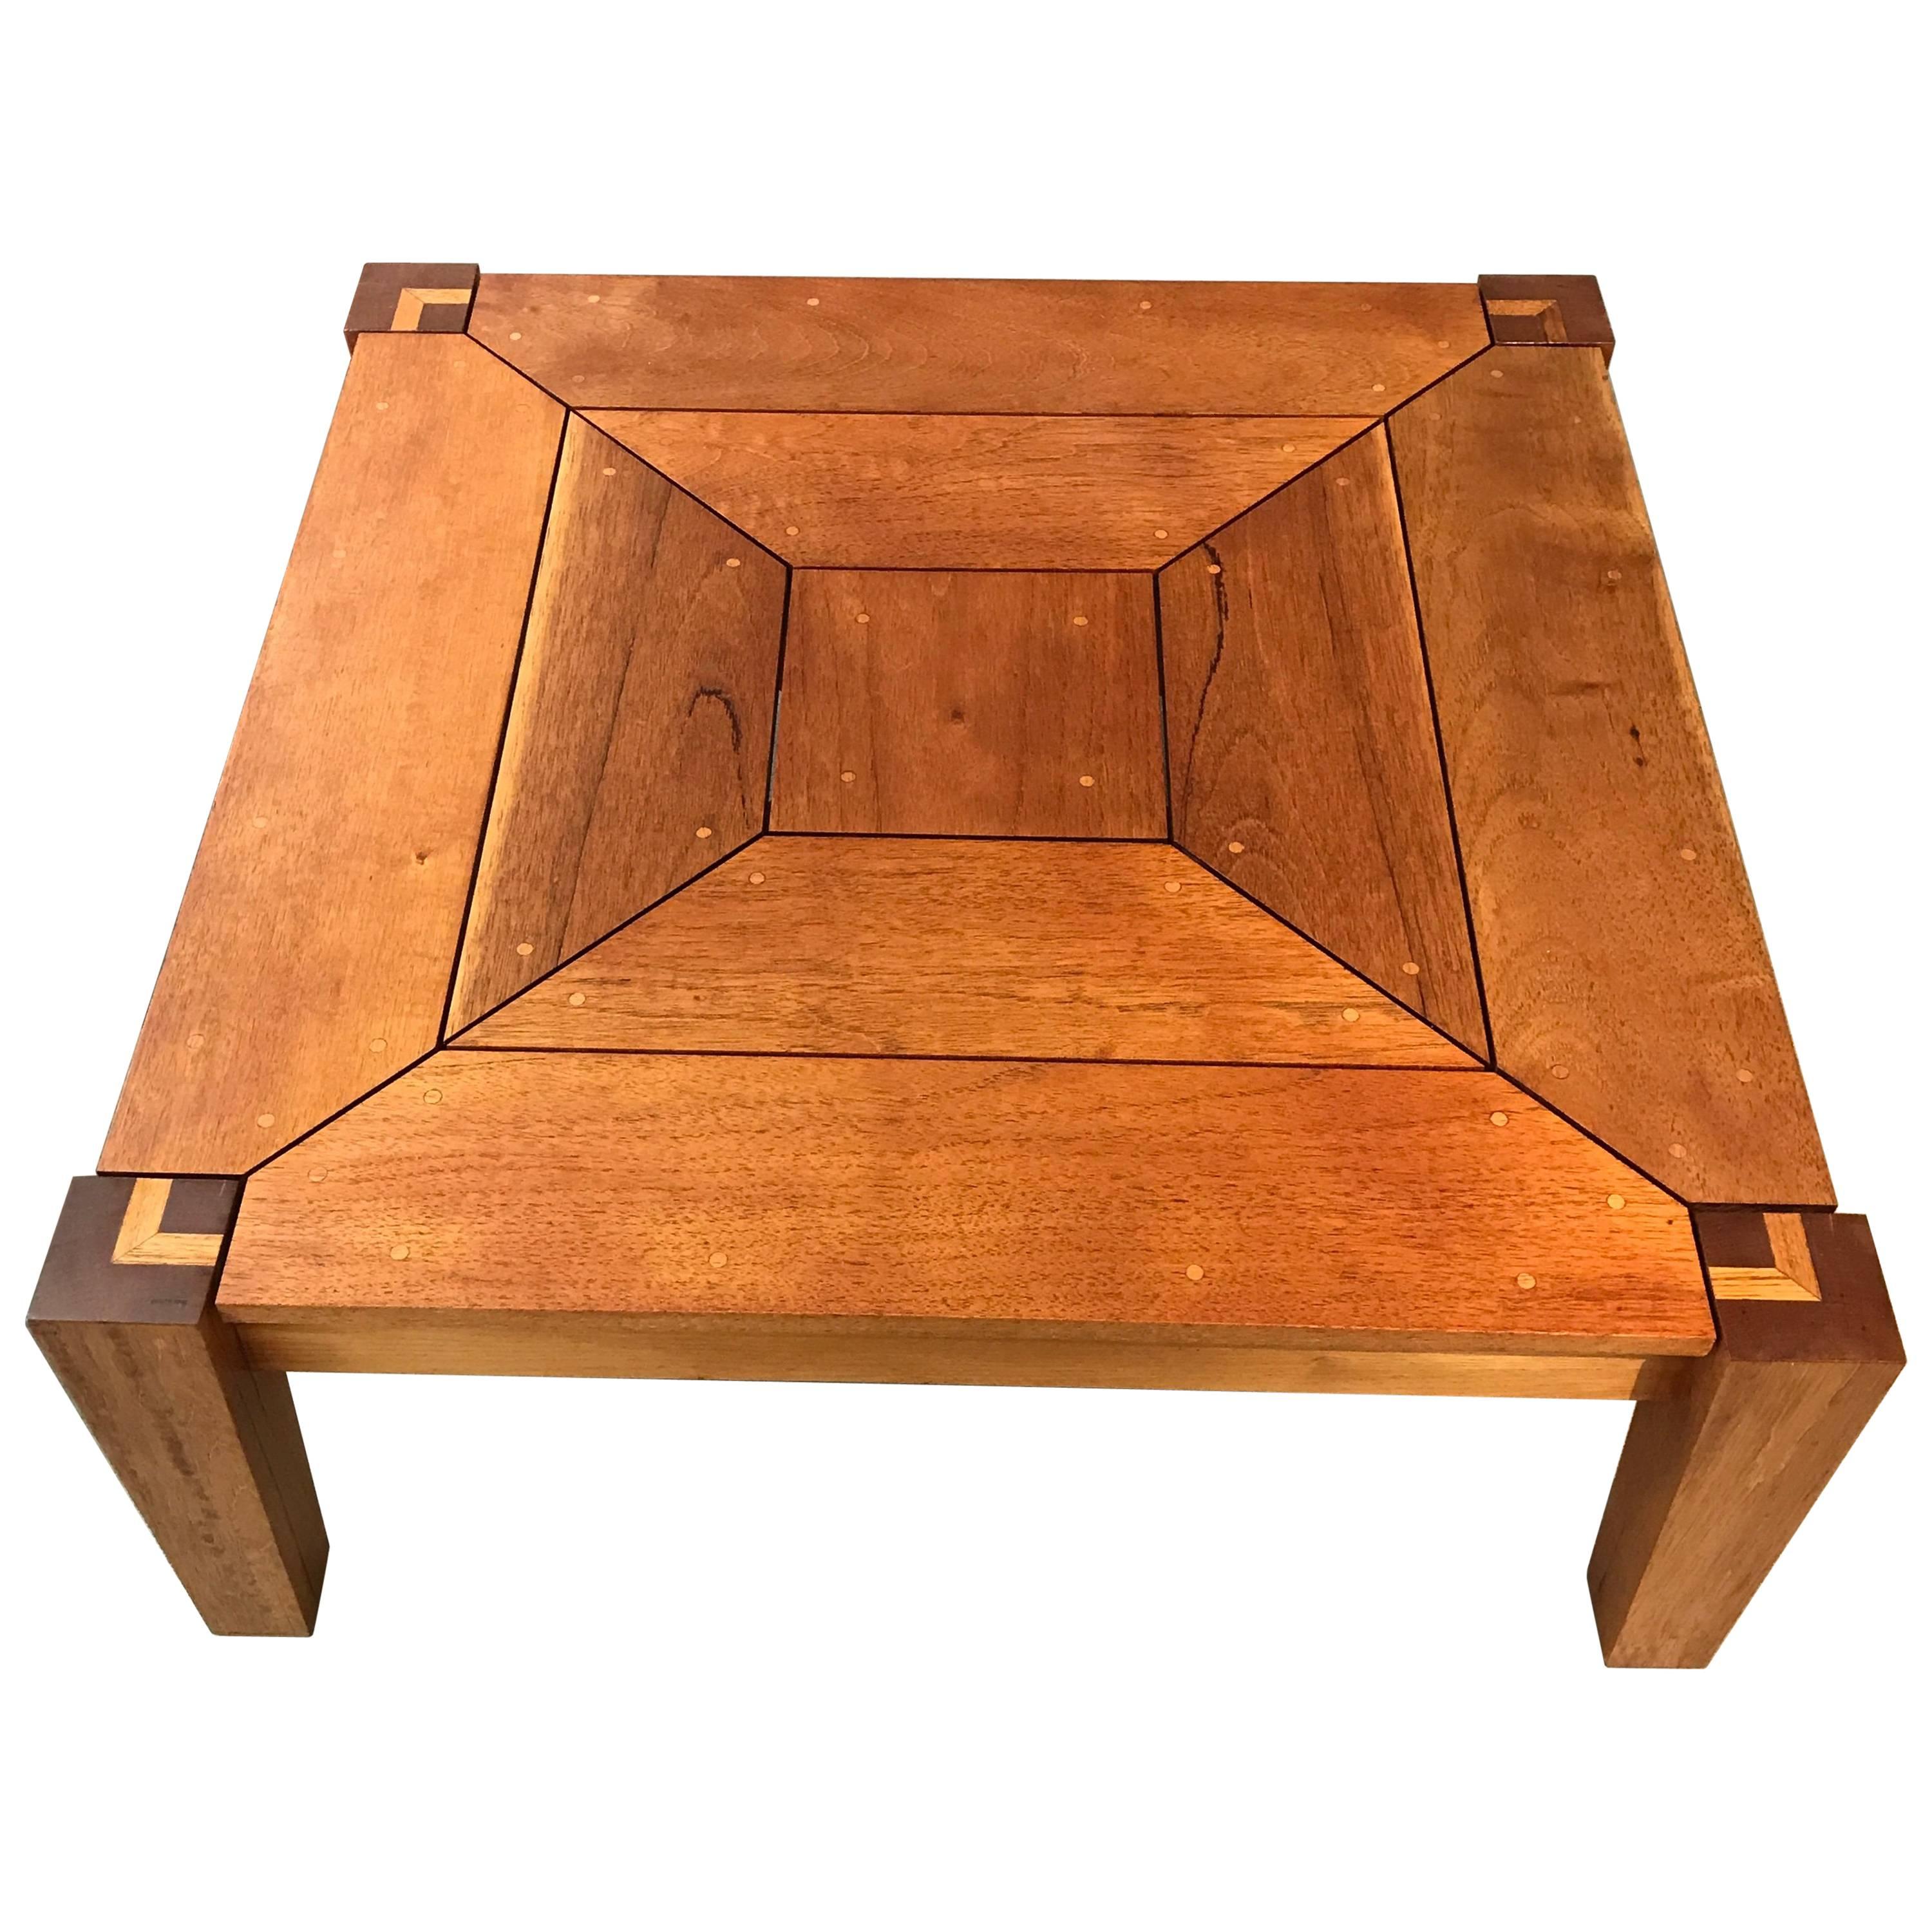 Rob Edley Welborn Prototype Square Coffee Table in Spanish Cedar